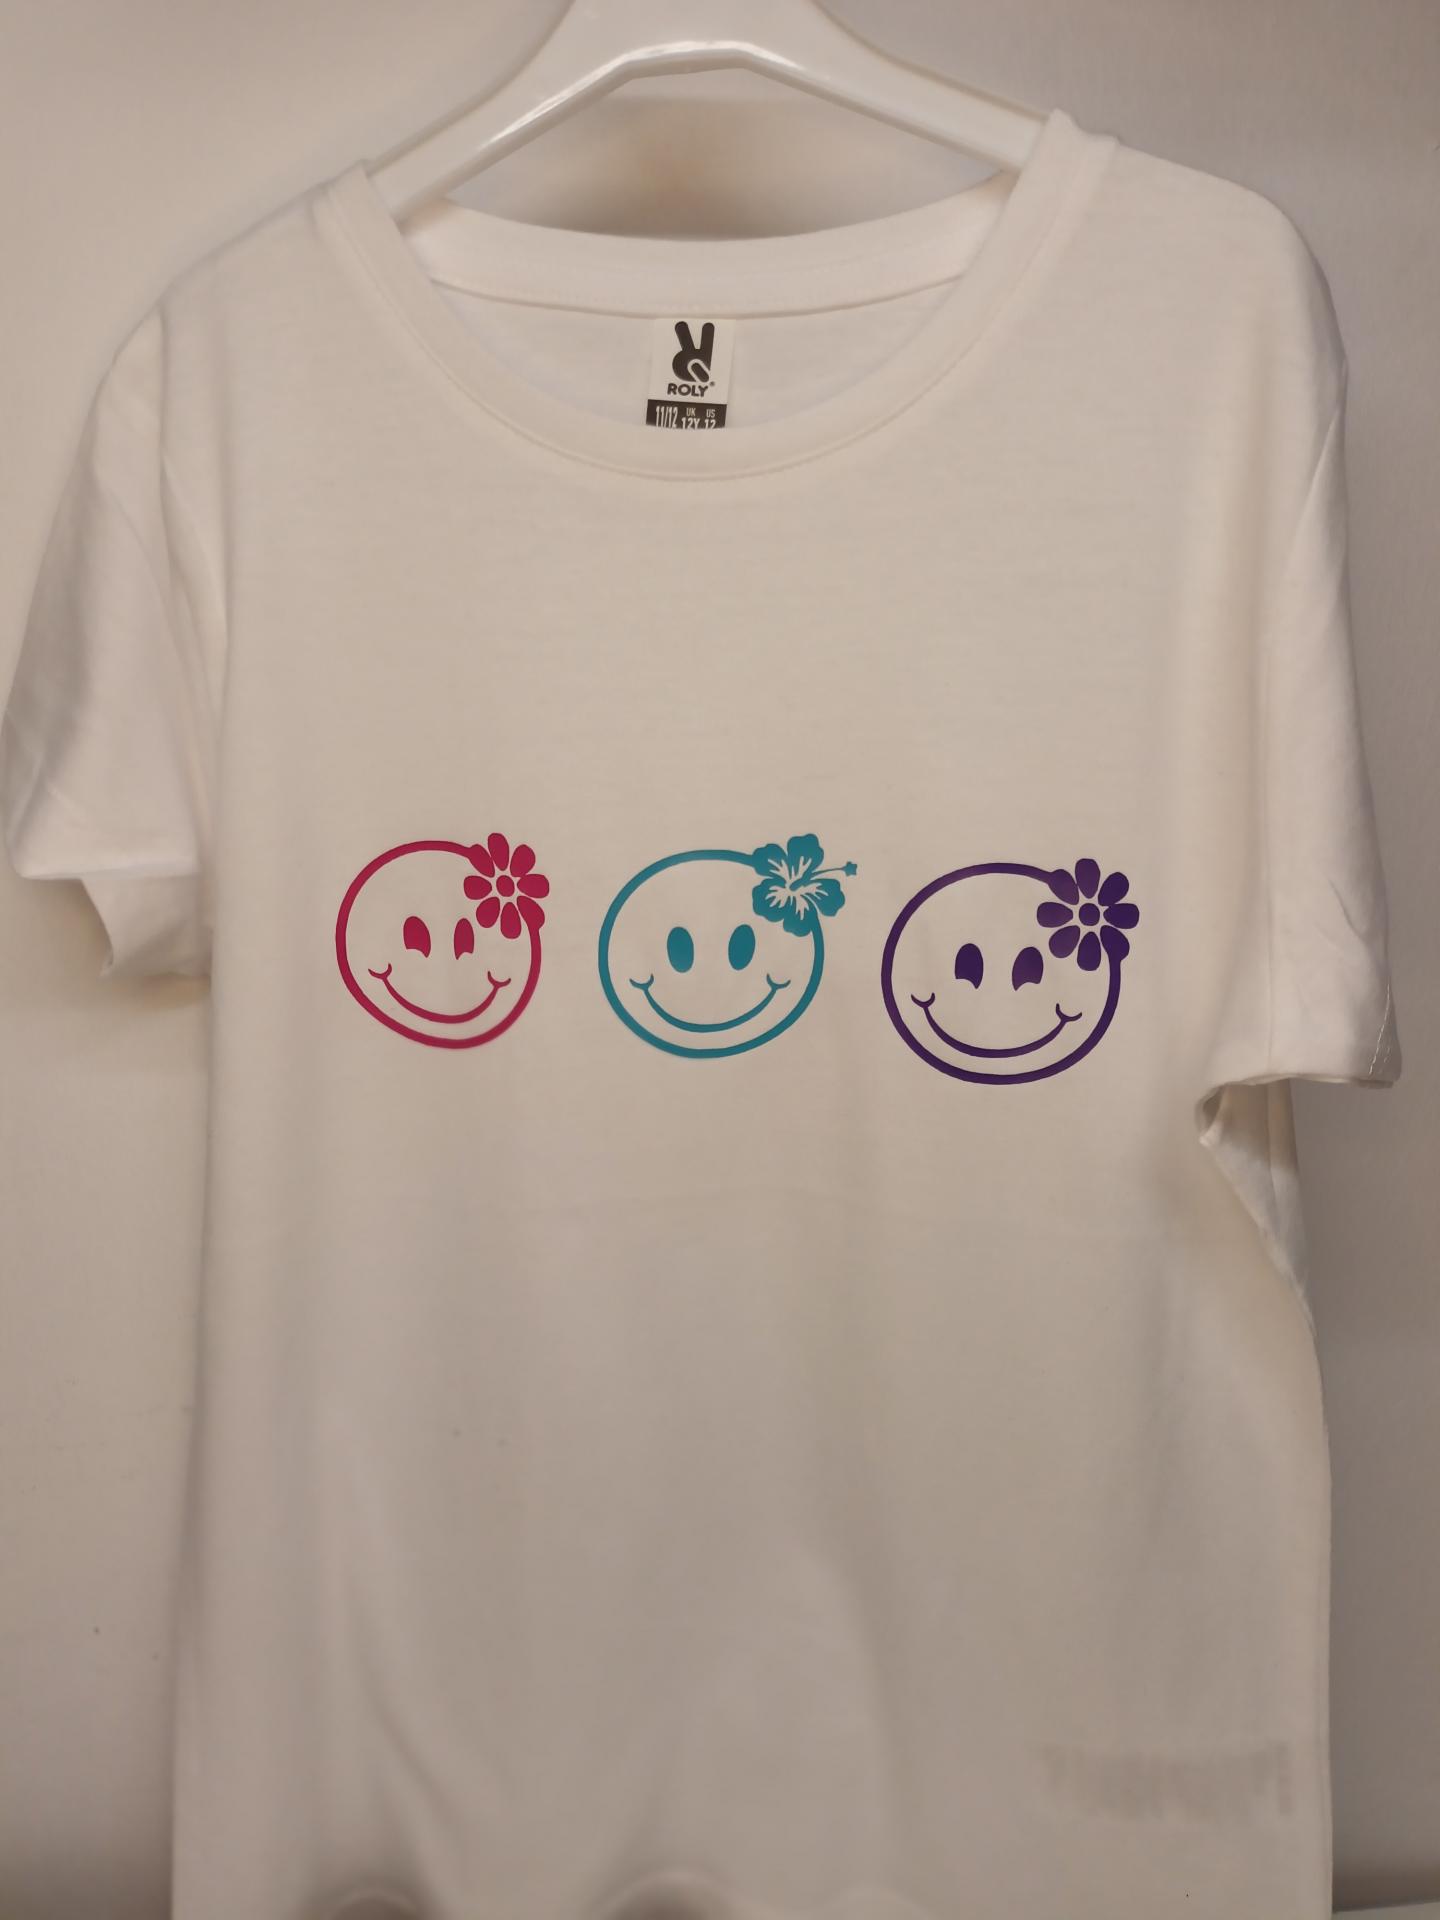 Camiseta Emojis.